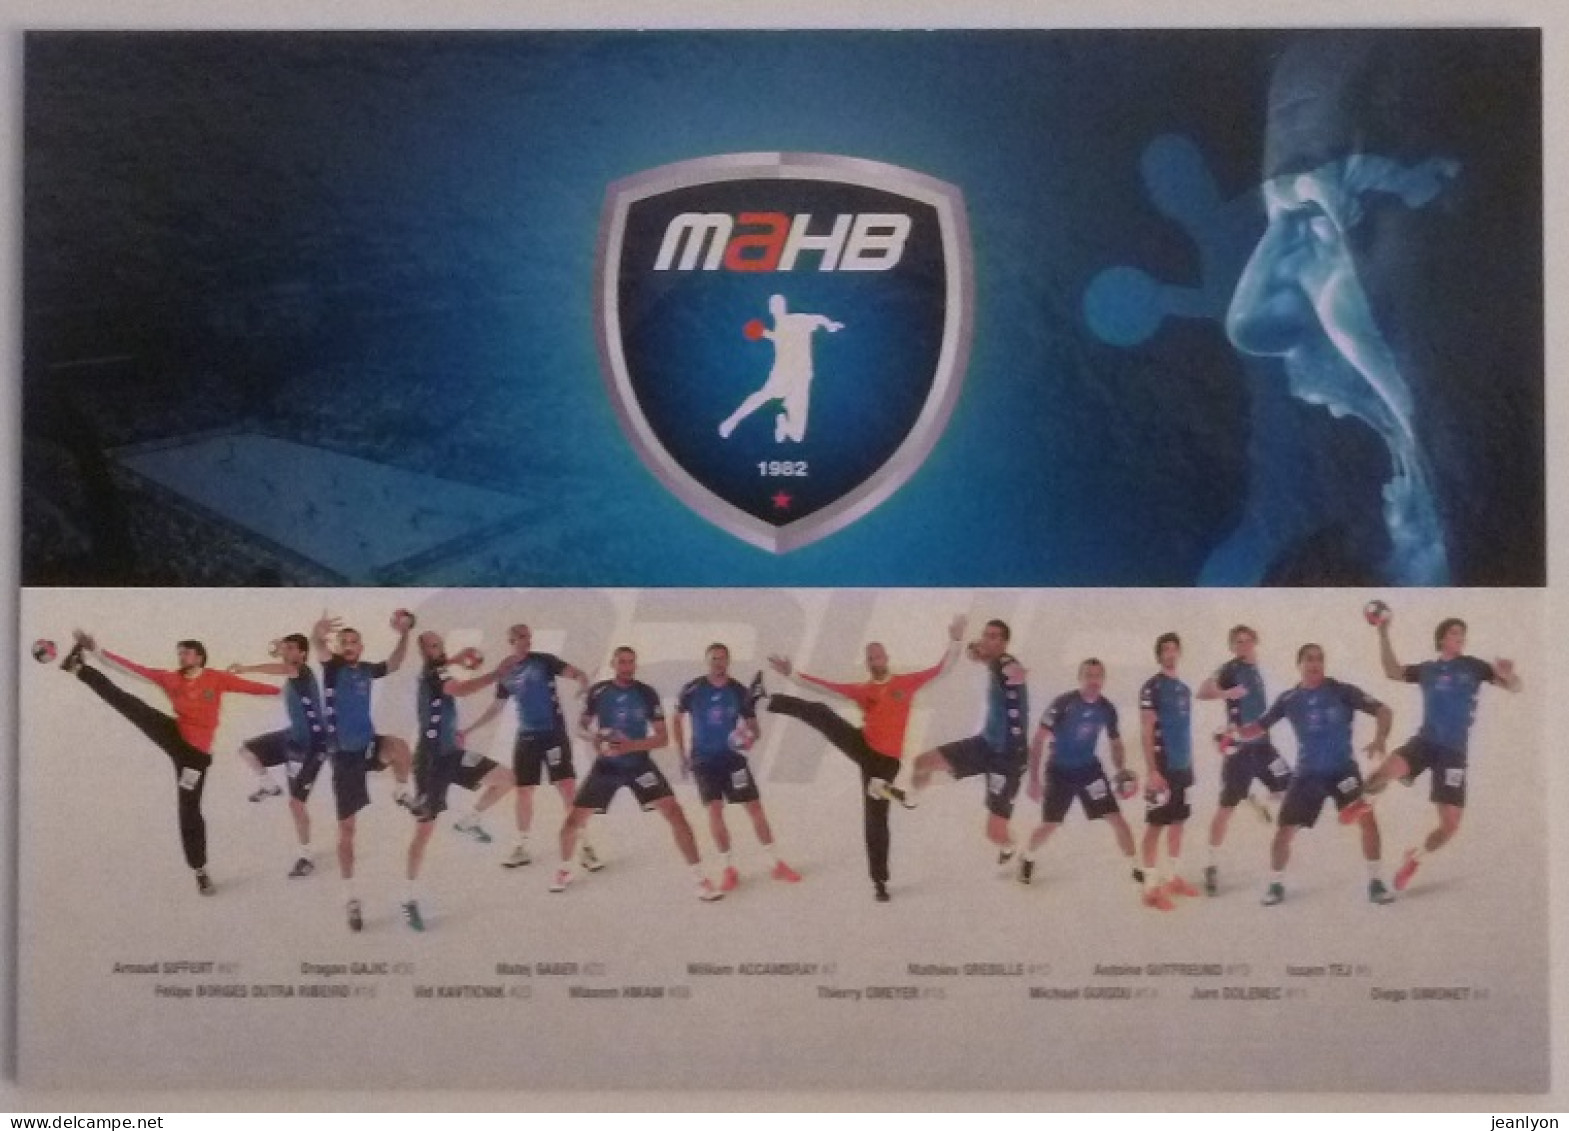 HANDBALL - MAHB Montpellier - Equipe 2014 / Palais Des Sports En Fond , à Coté Du Blason - Carte Publicitaire - Handbal